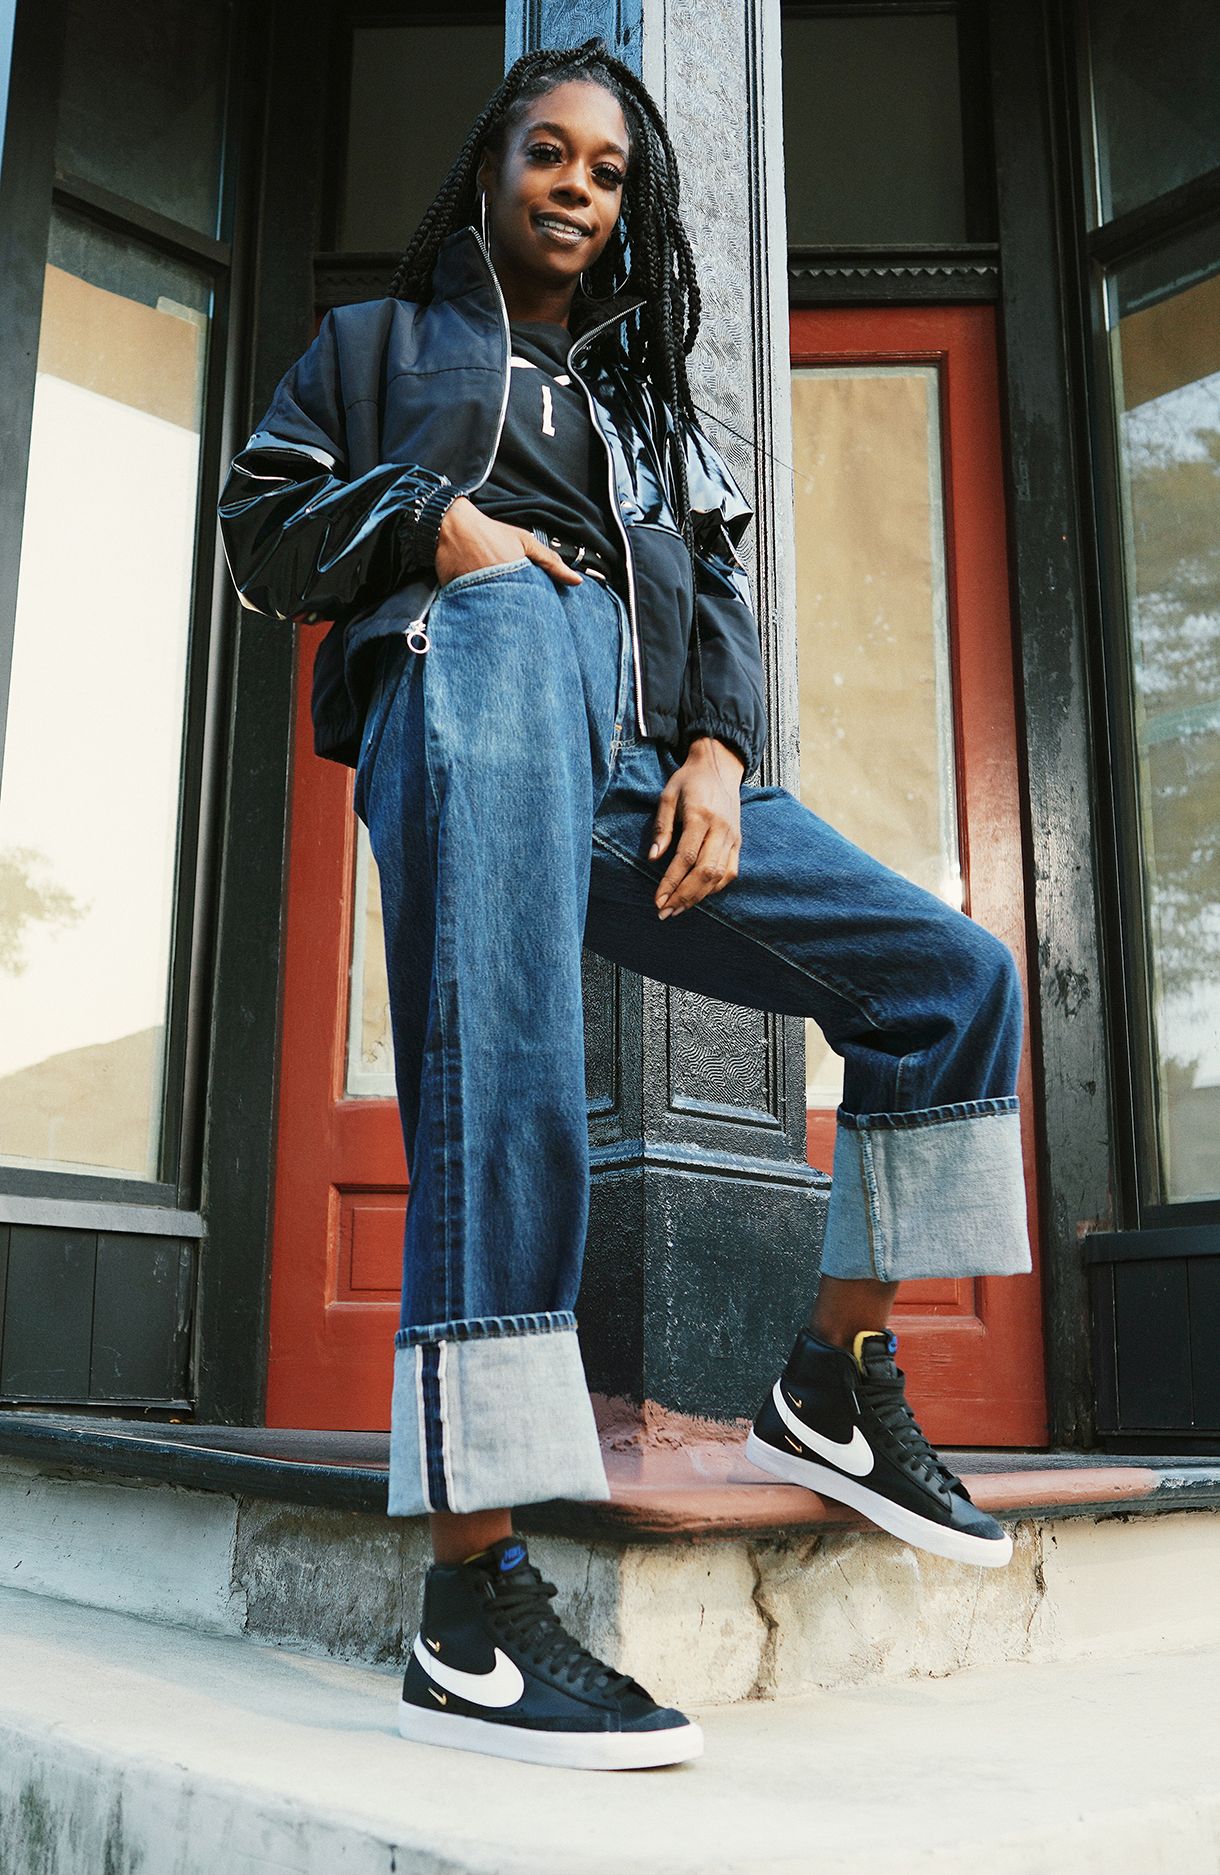 Tamara in street clothes on door step wearing black Nike high tops